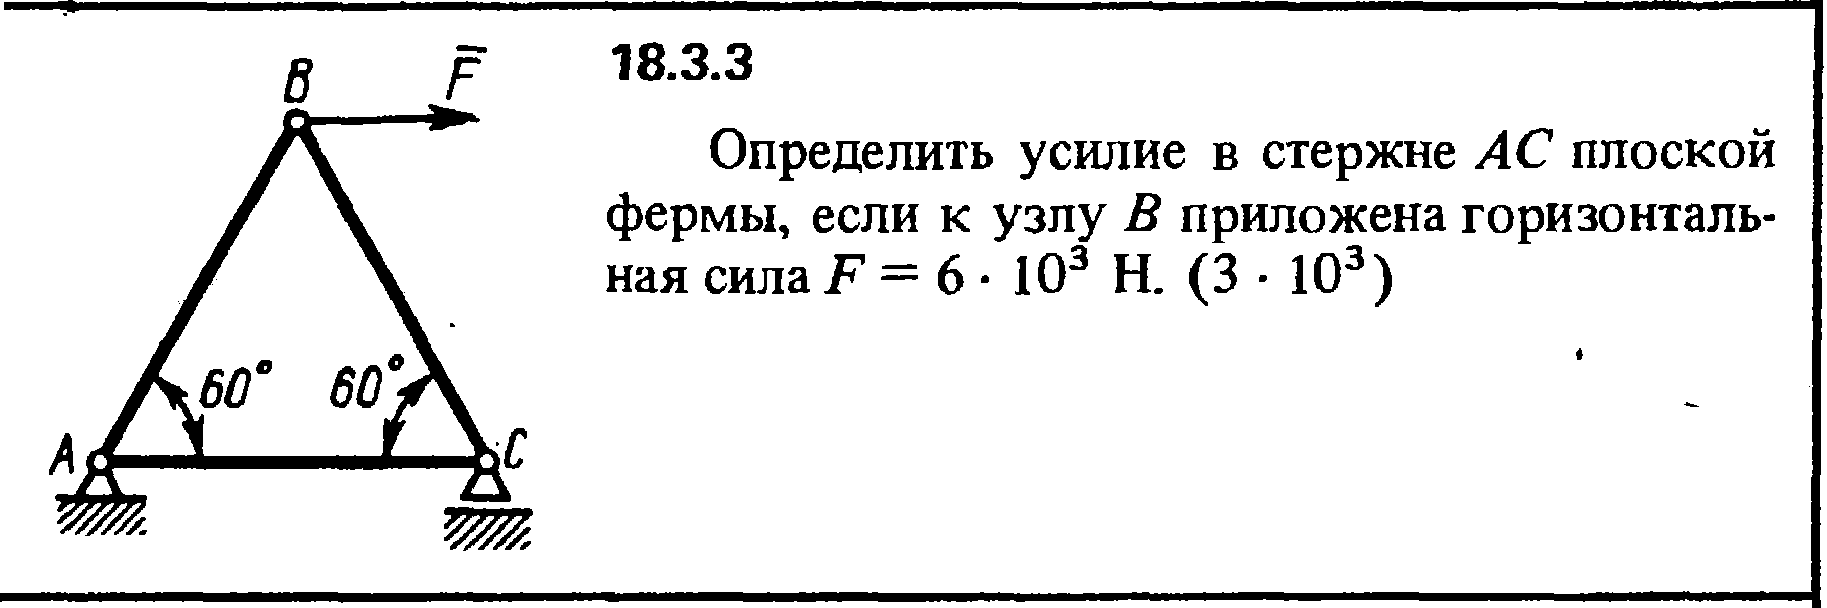 Решение 18.3.3 из сборника (решебника) Кепе О.Е. 1989